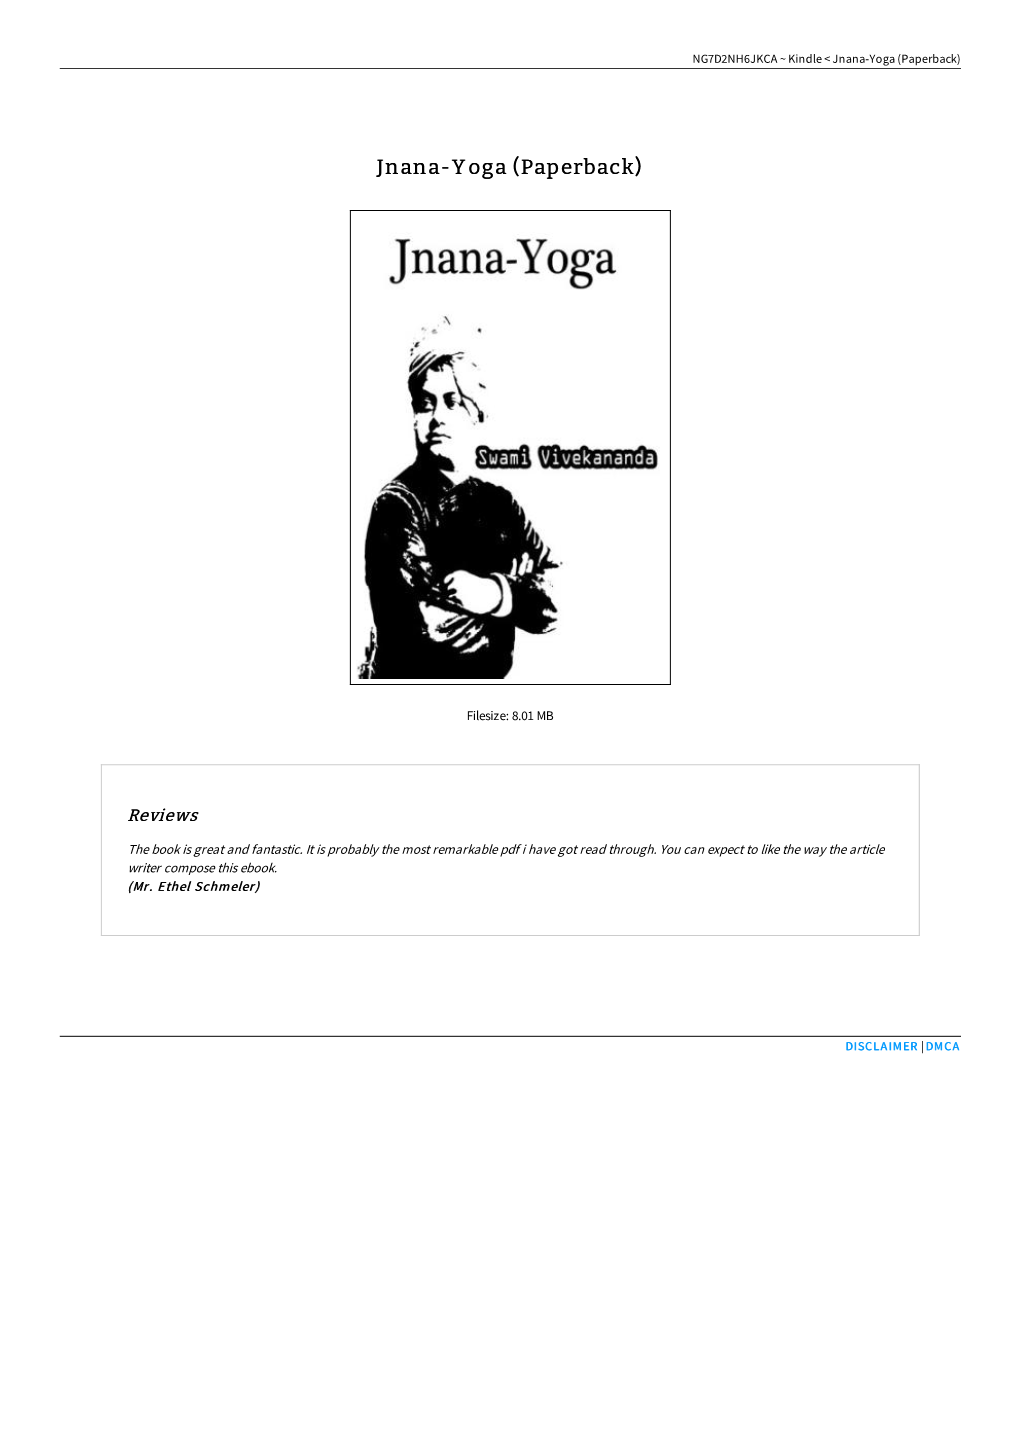 Read Book // Jnana-Yoga (Paperback) // JXA4JUDA3NAZ